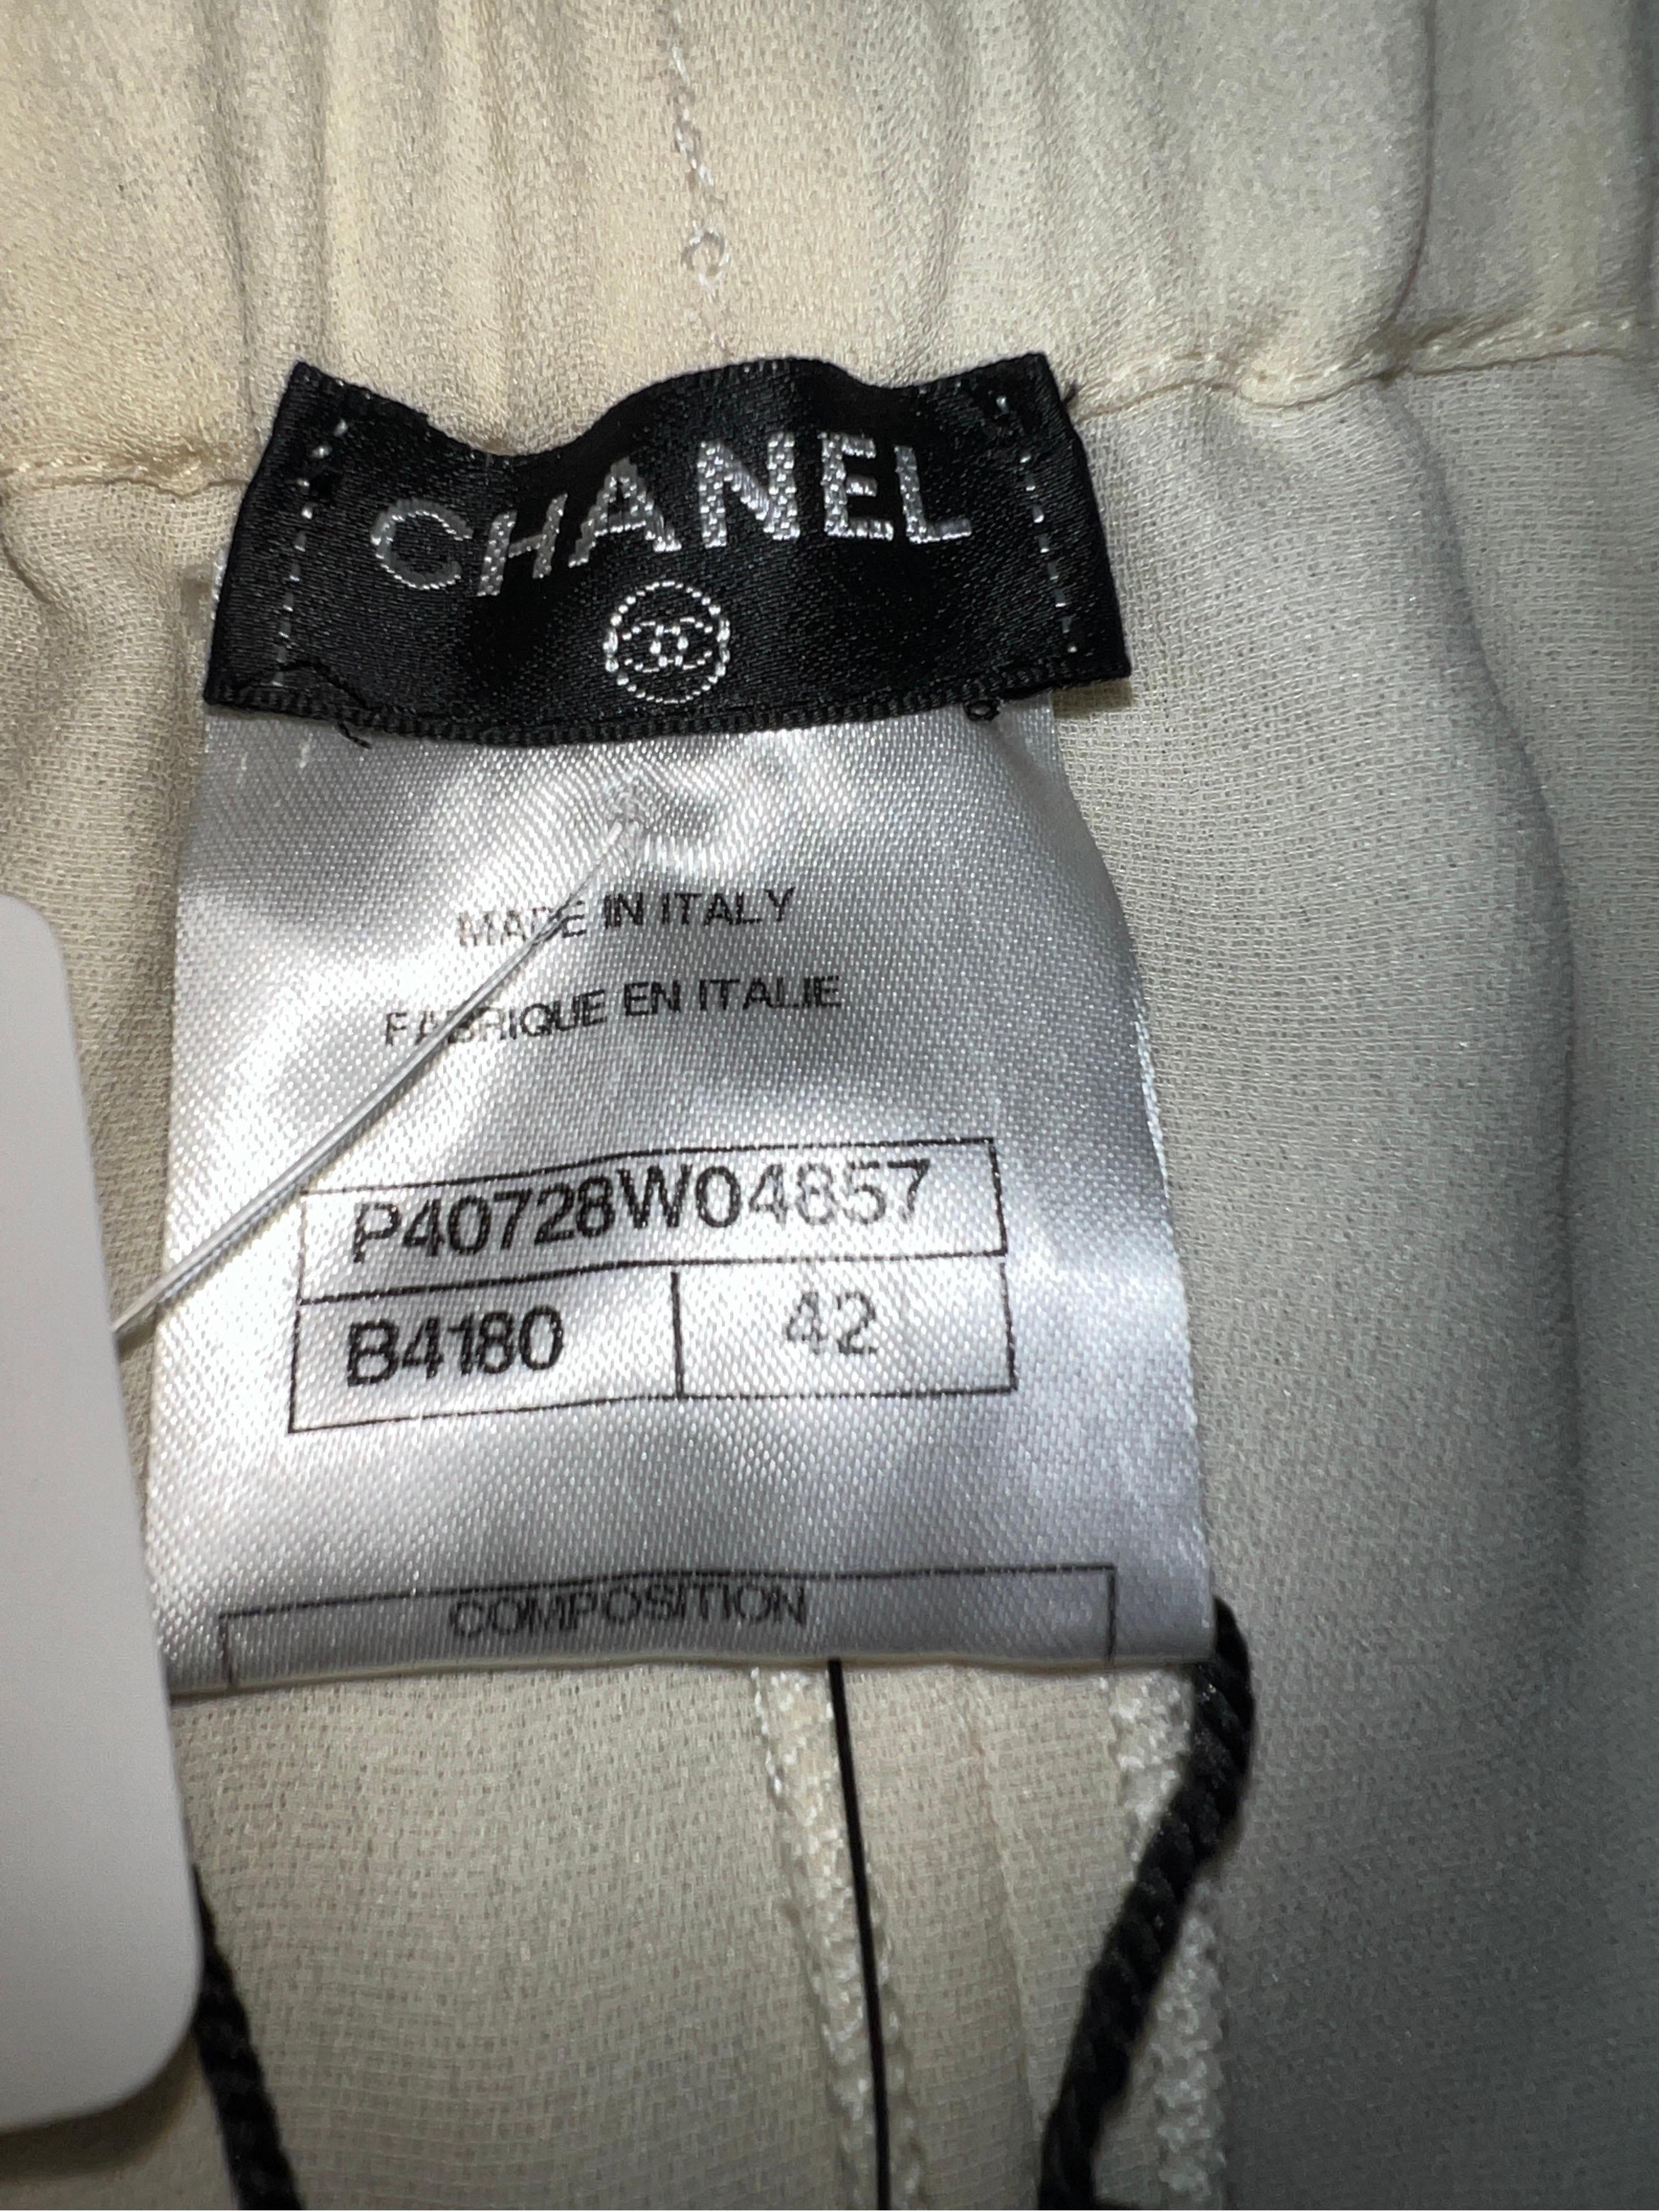 UNWORN Chanel Signature Monochrome Cream Black Playsuit Mini Jumpsuit Overall 42 In Excellent Condition For Sale In Switzerland, CH